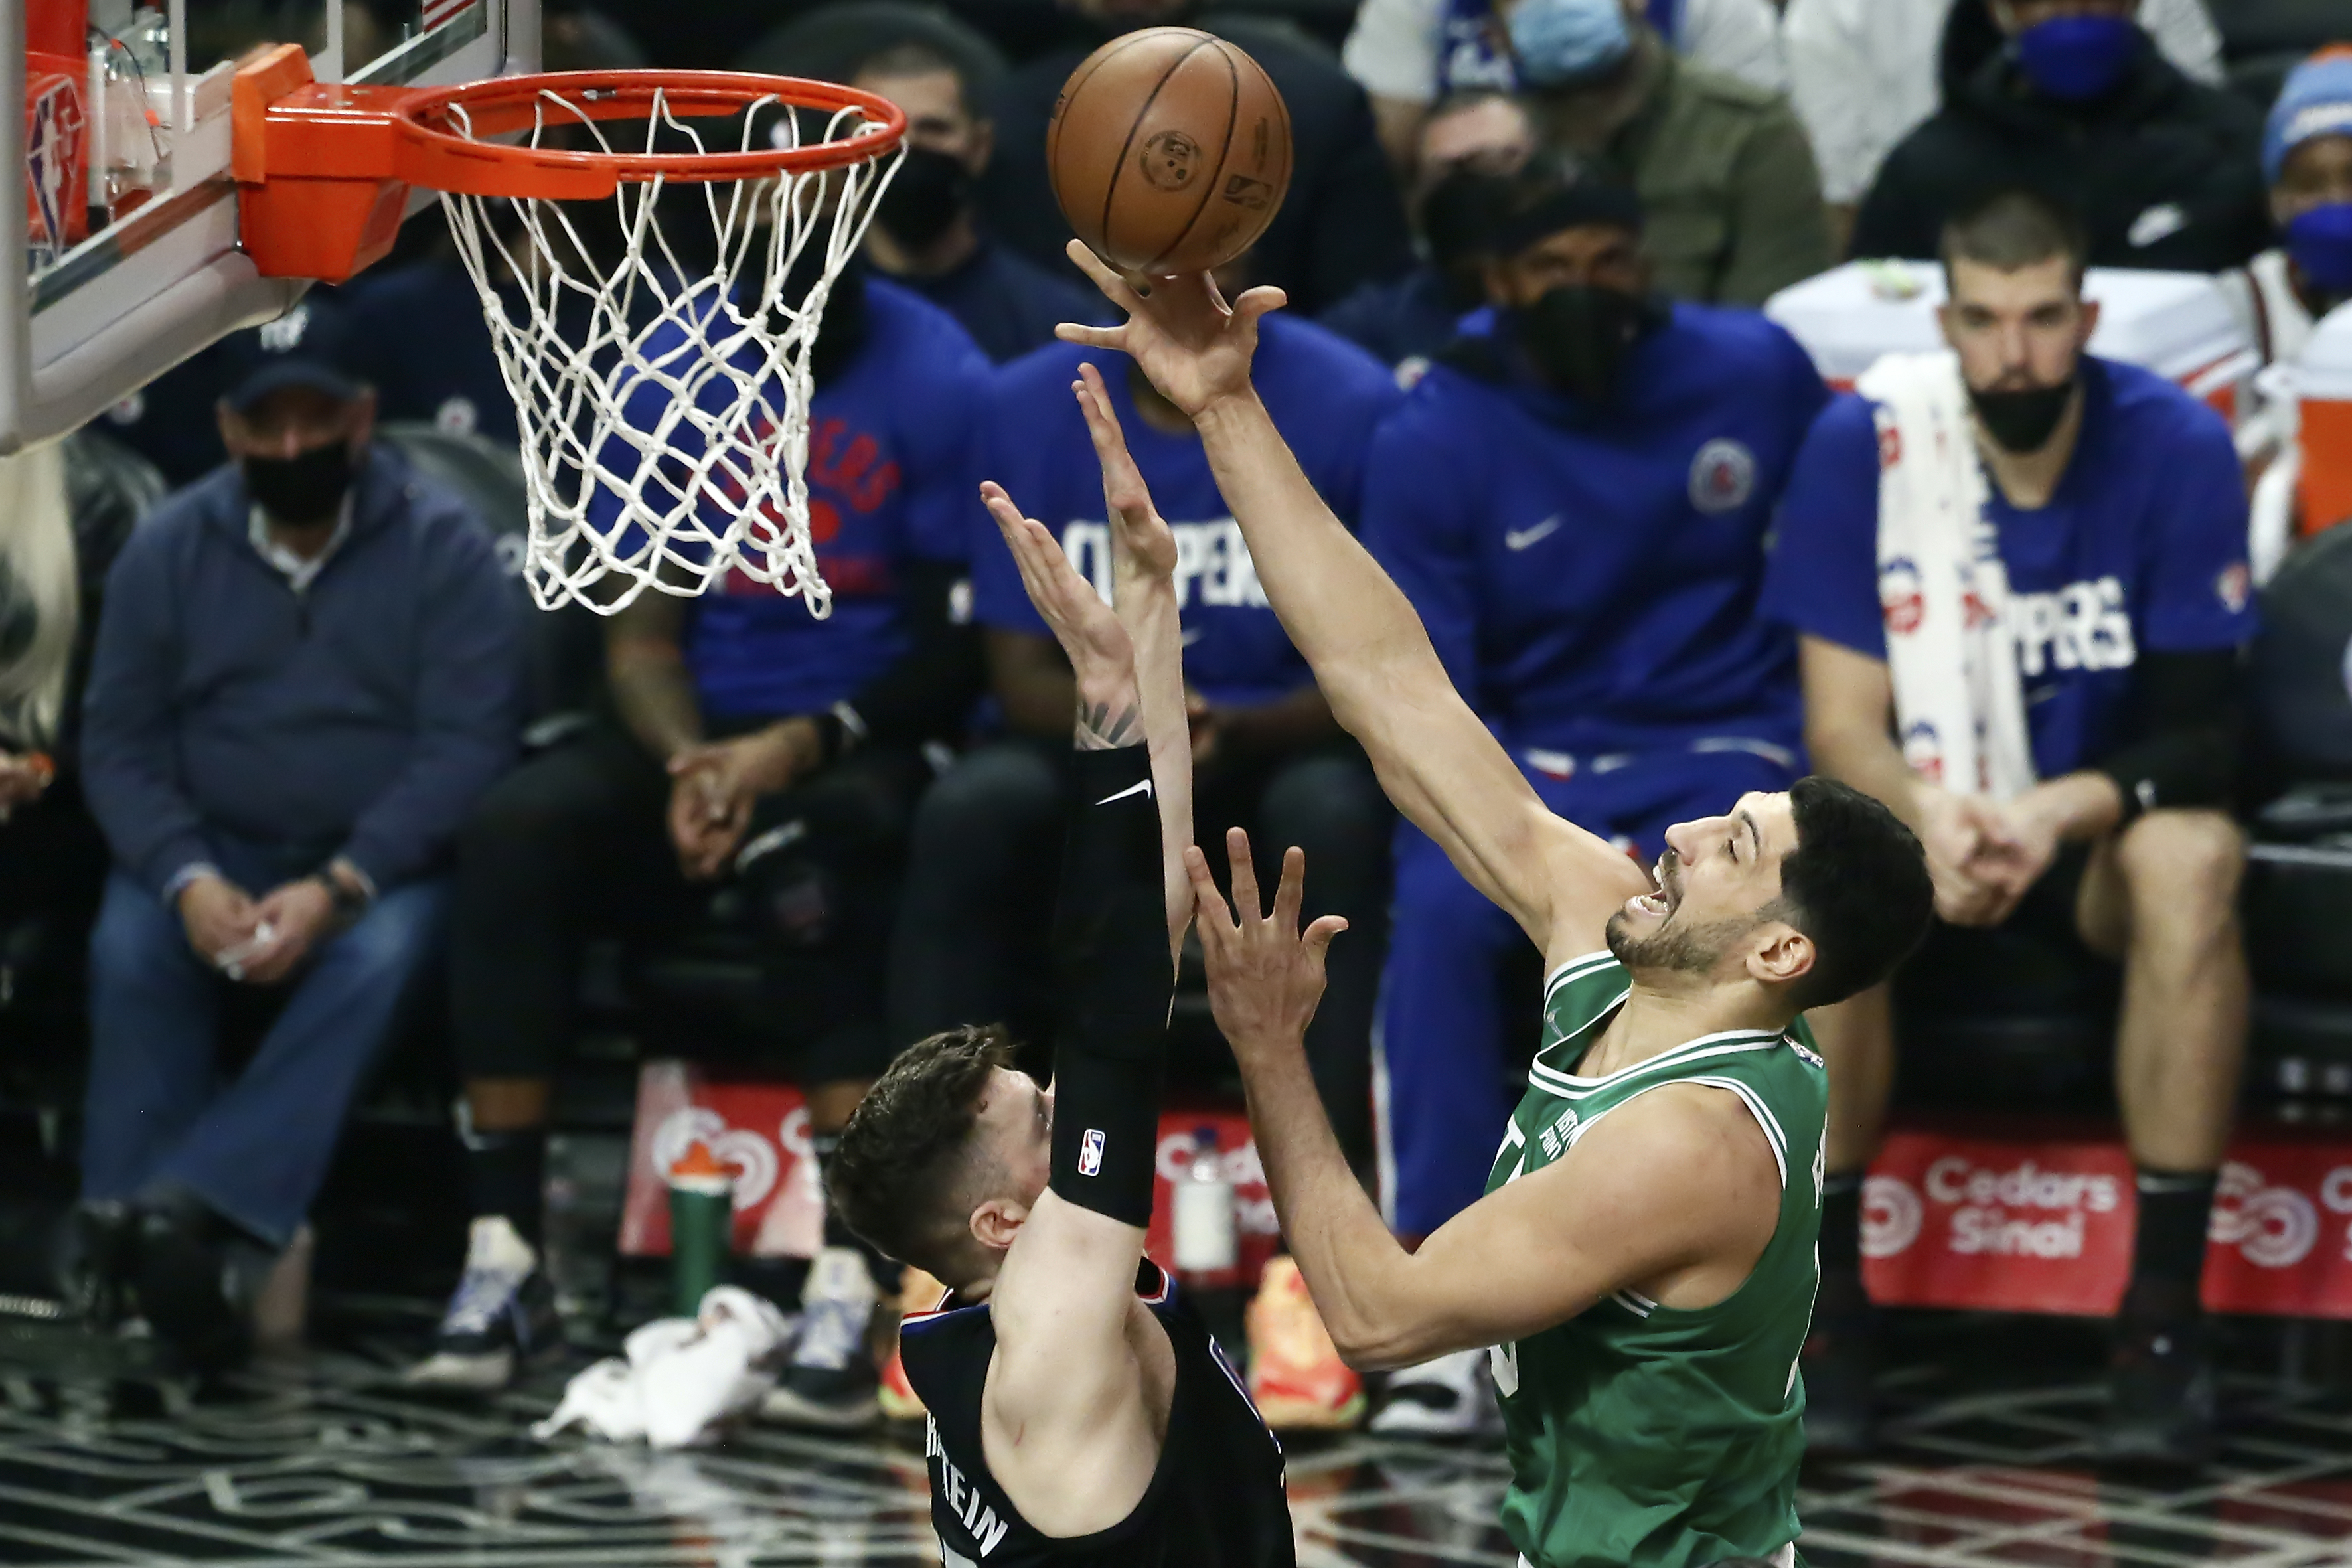 LeBron James Hits Back At Celtics Center's Criticism Of Nike-China